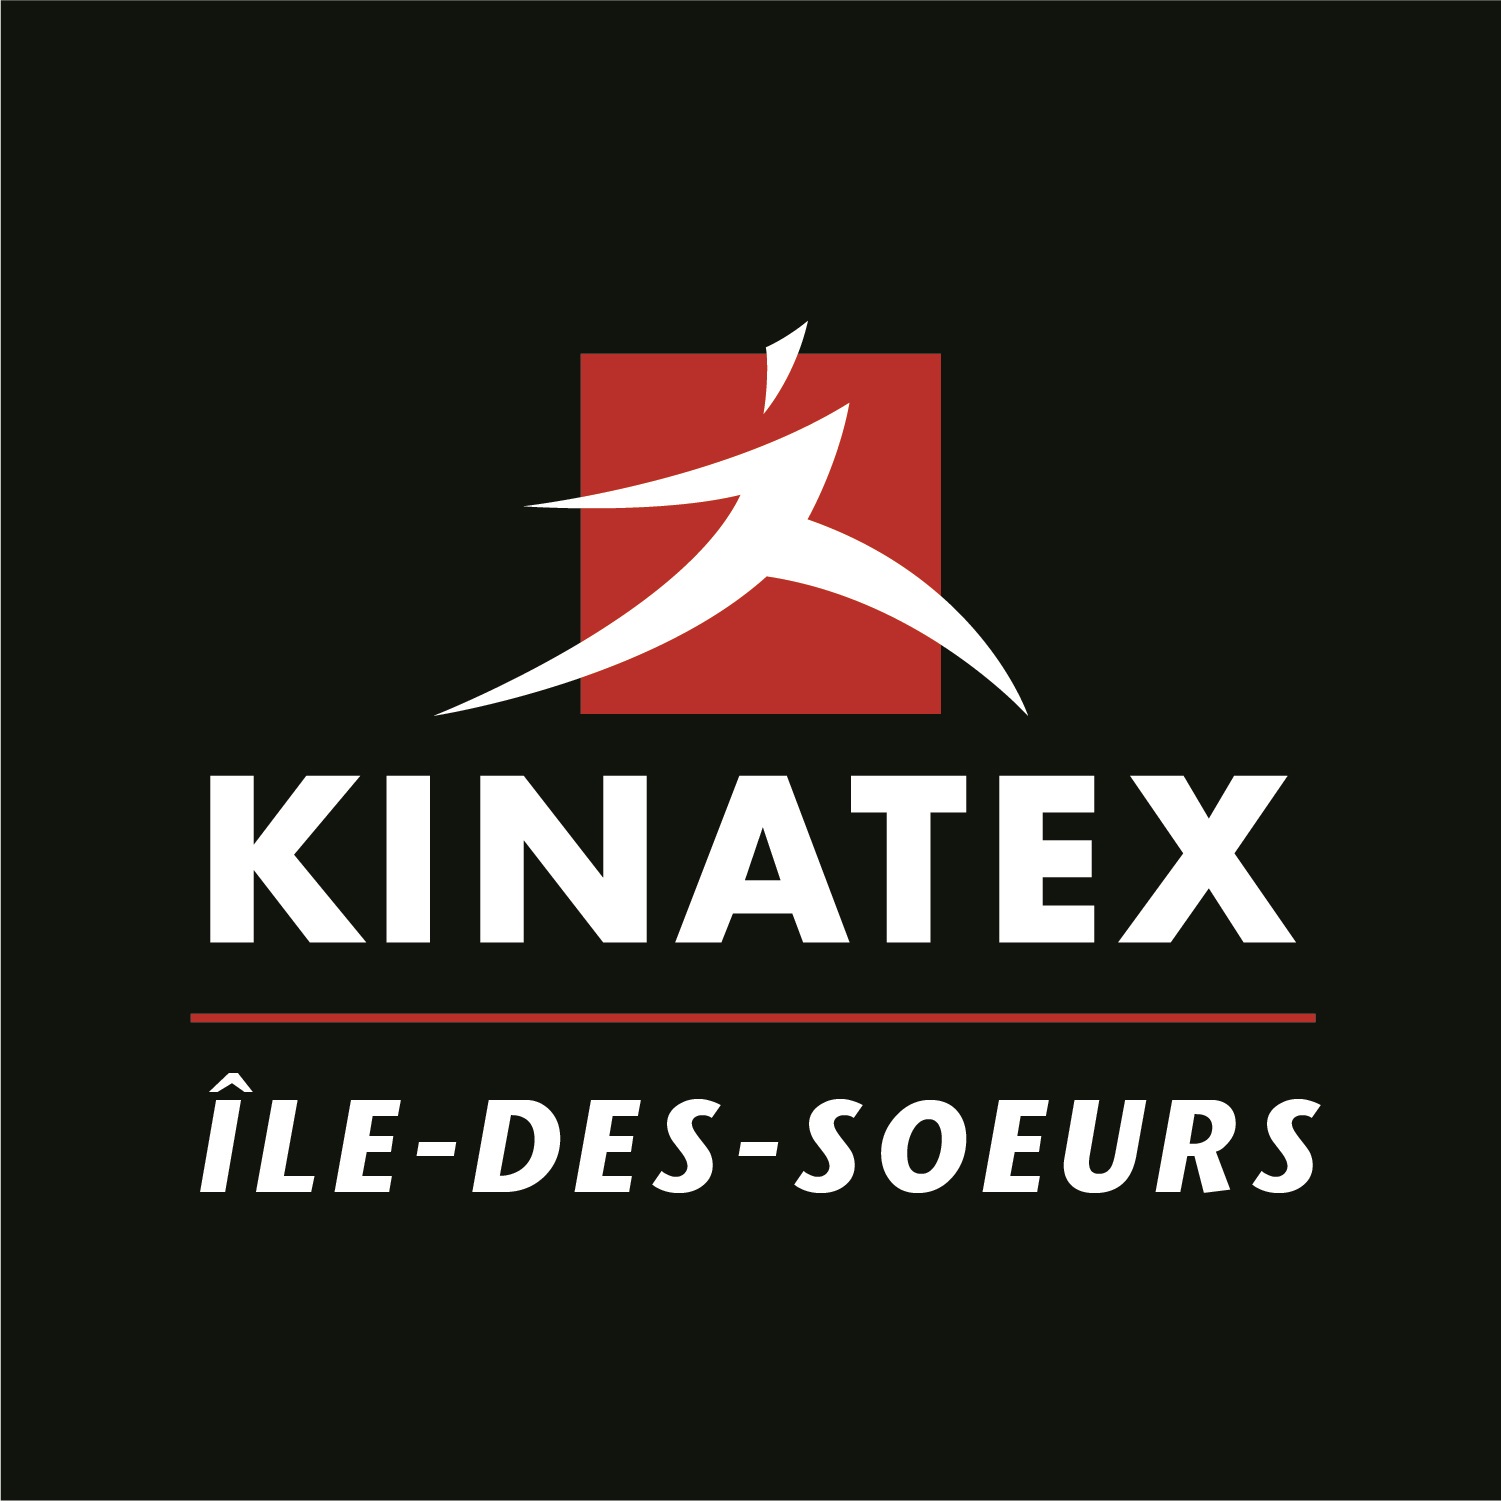 Kinatex